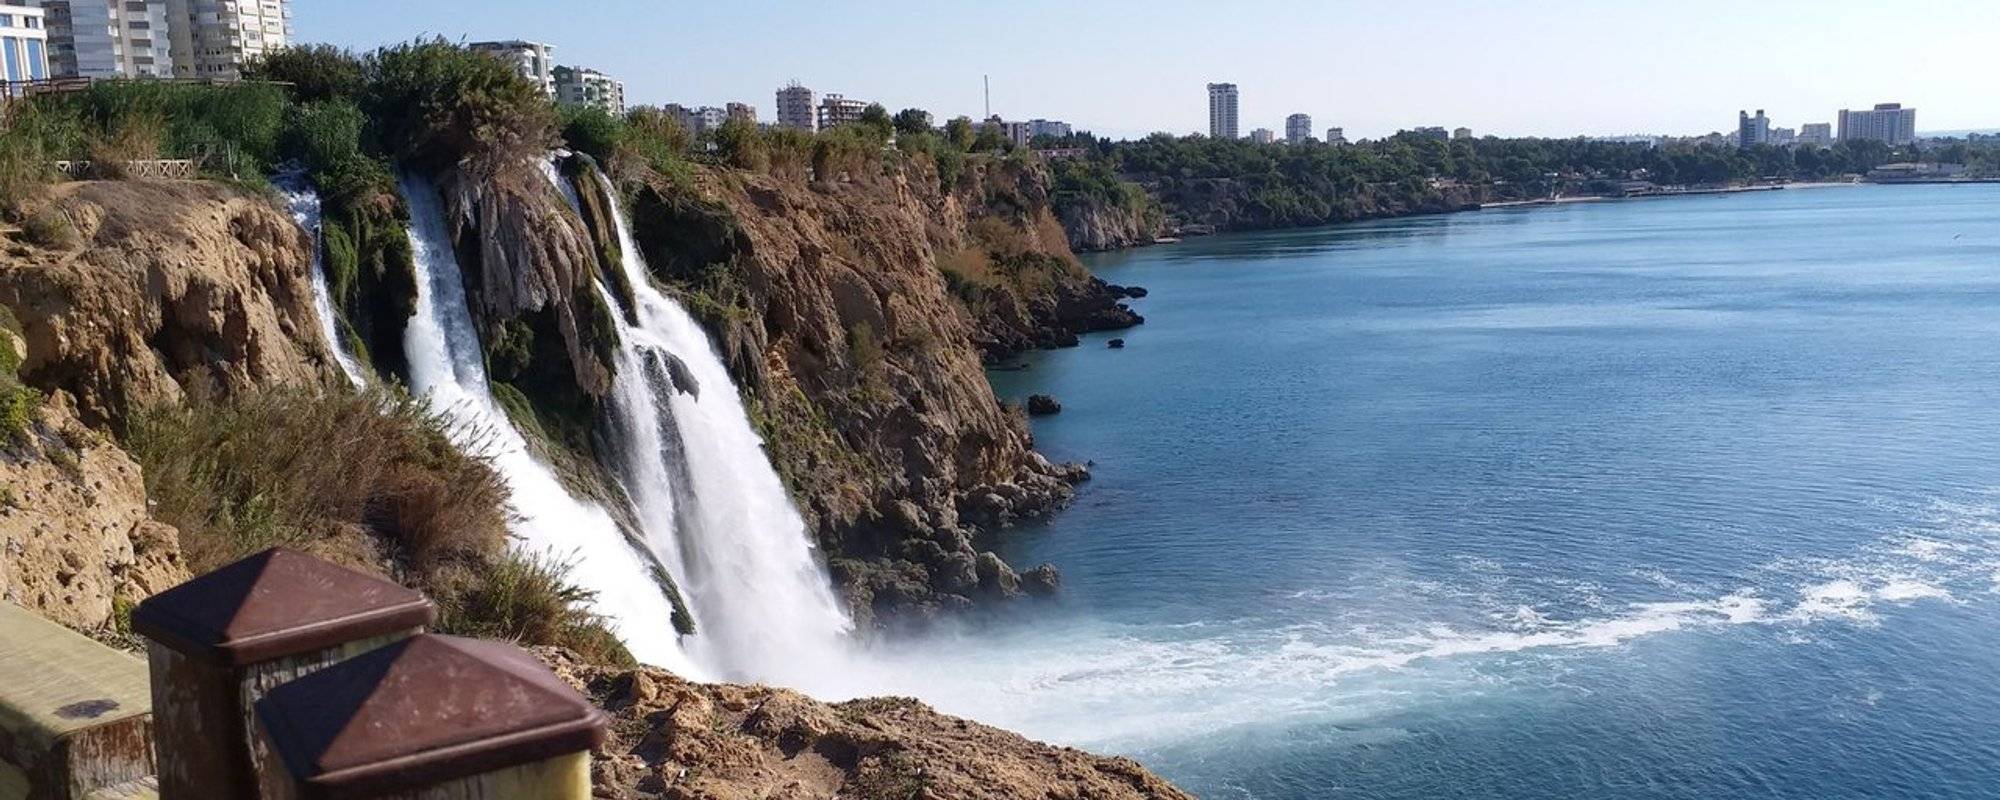 Duden Waterfall Park in Antalya, Turkey